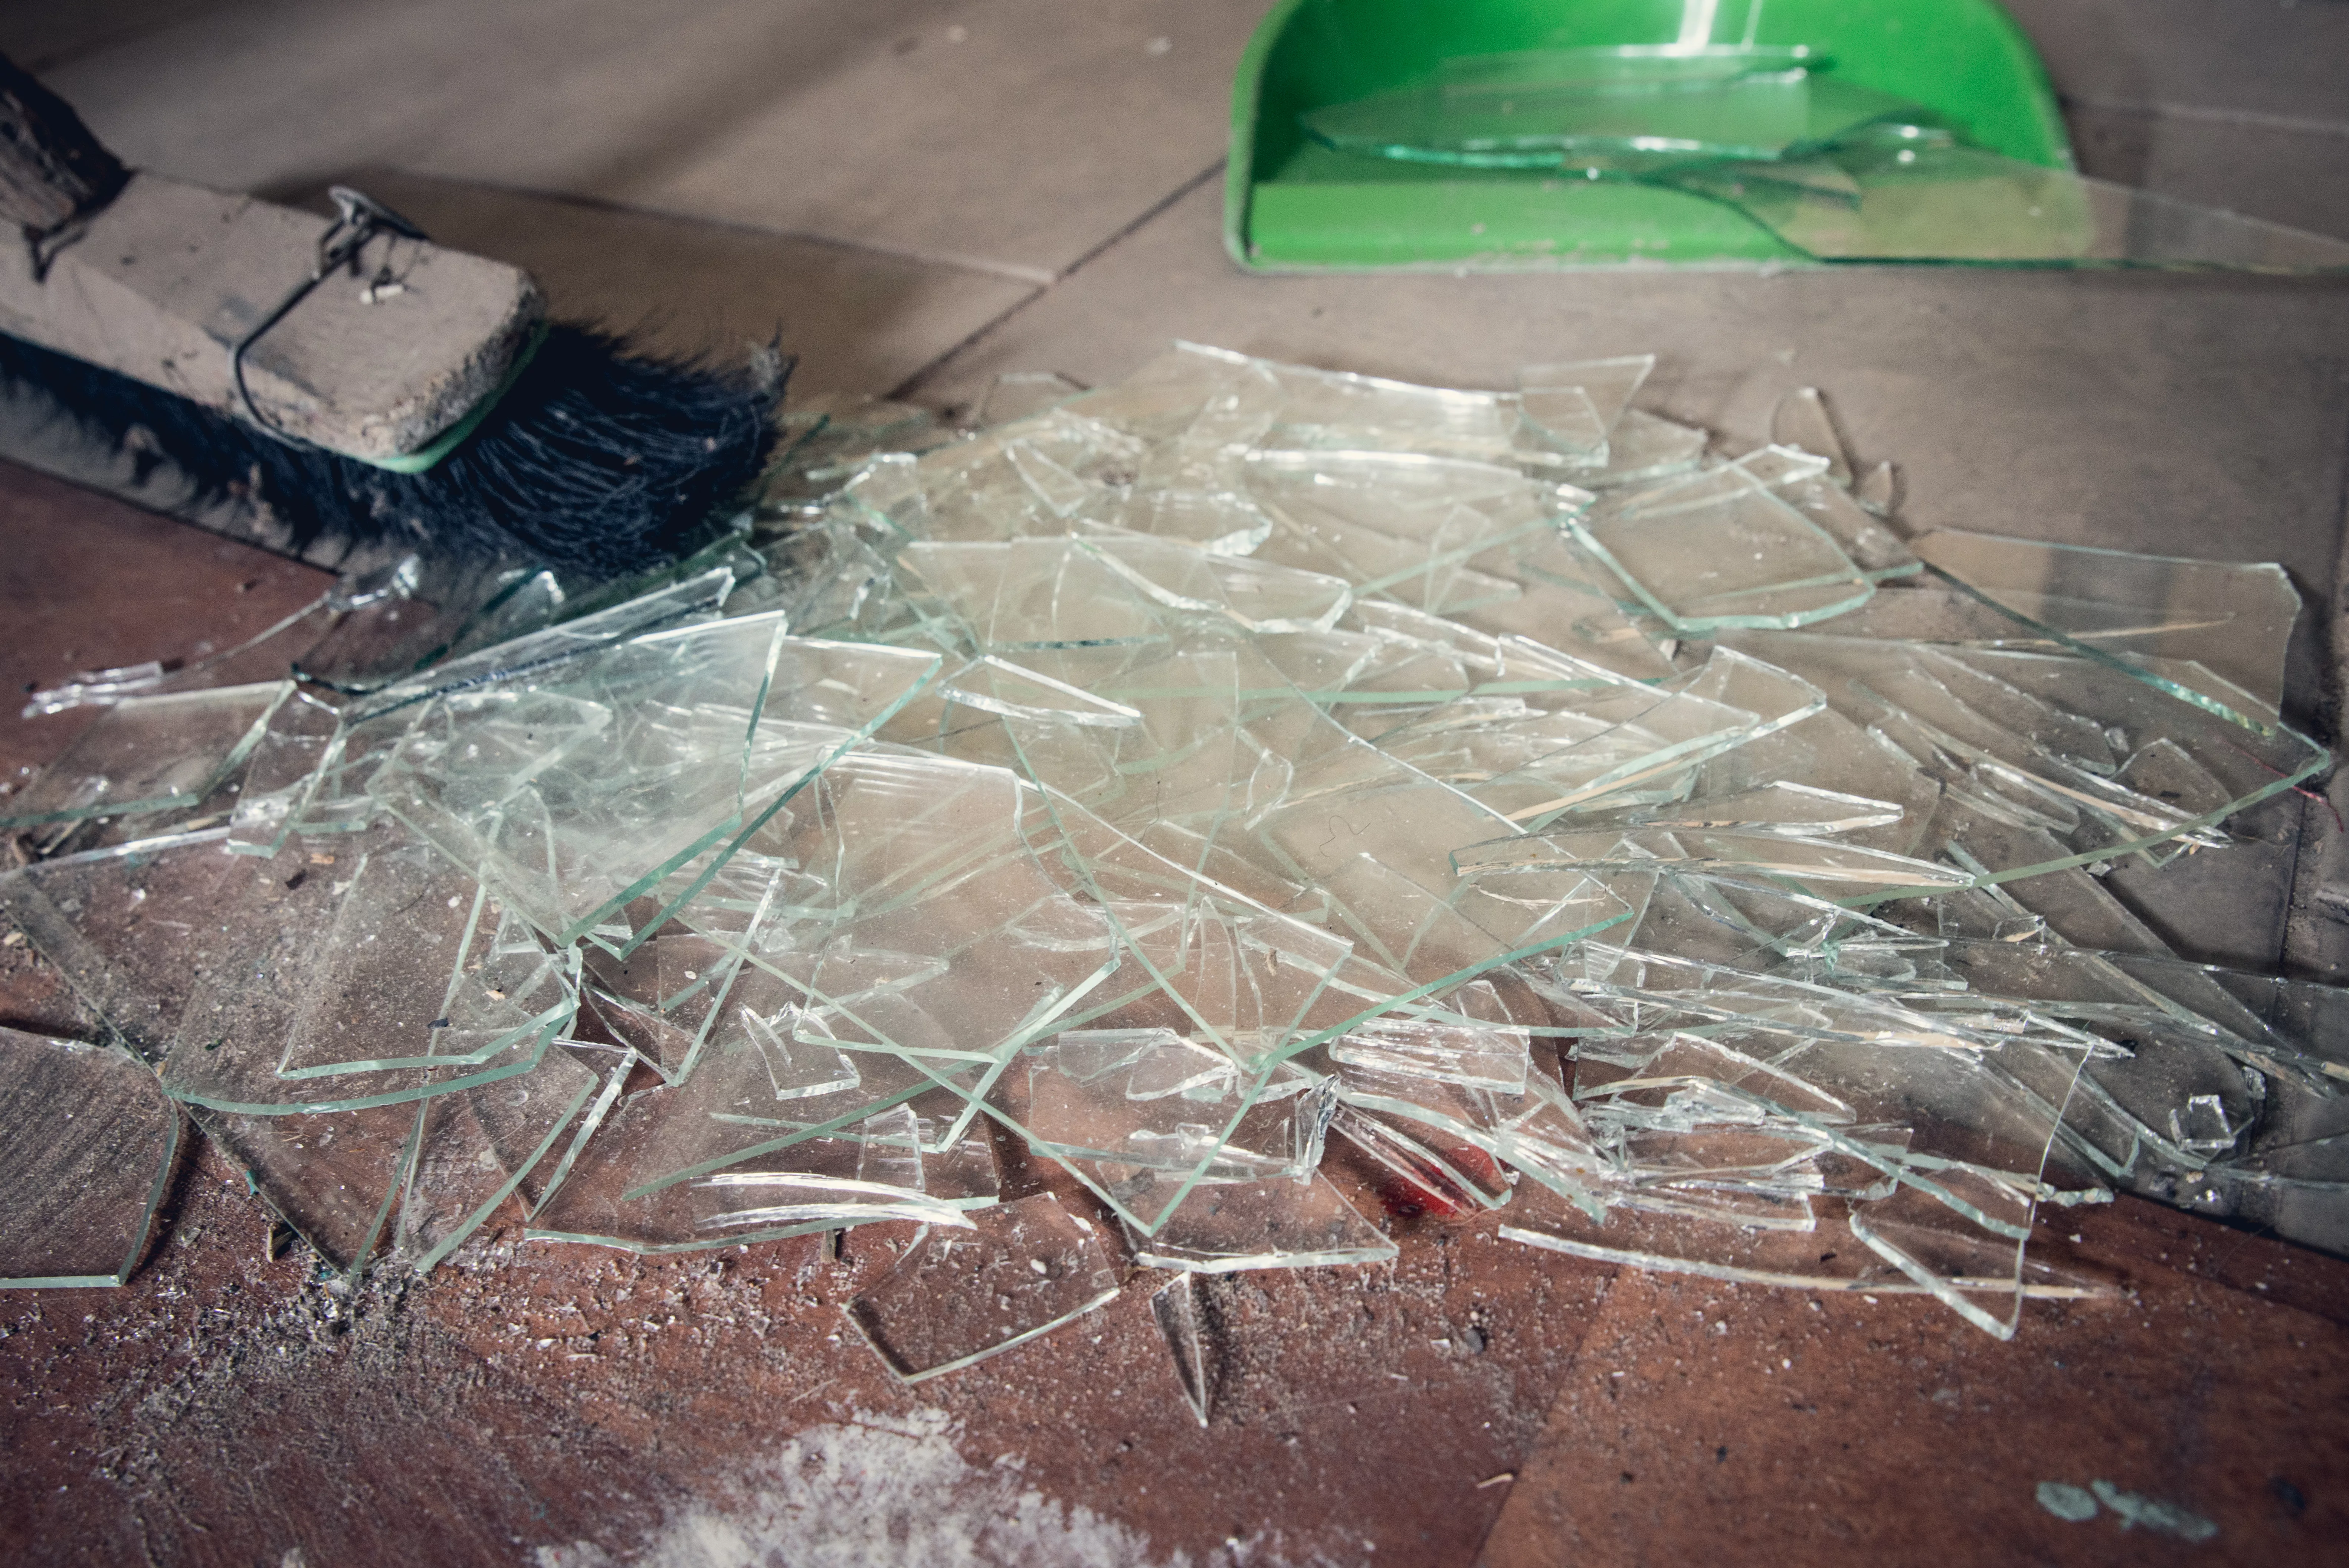 How to Clean Up Broken Glass in Quick & Easy Ways